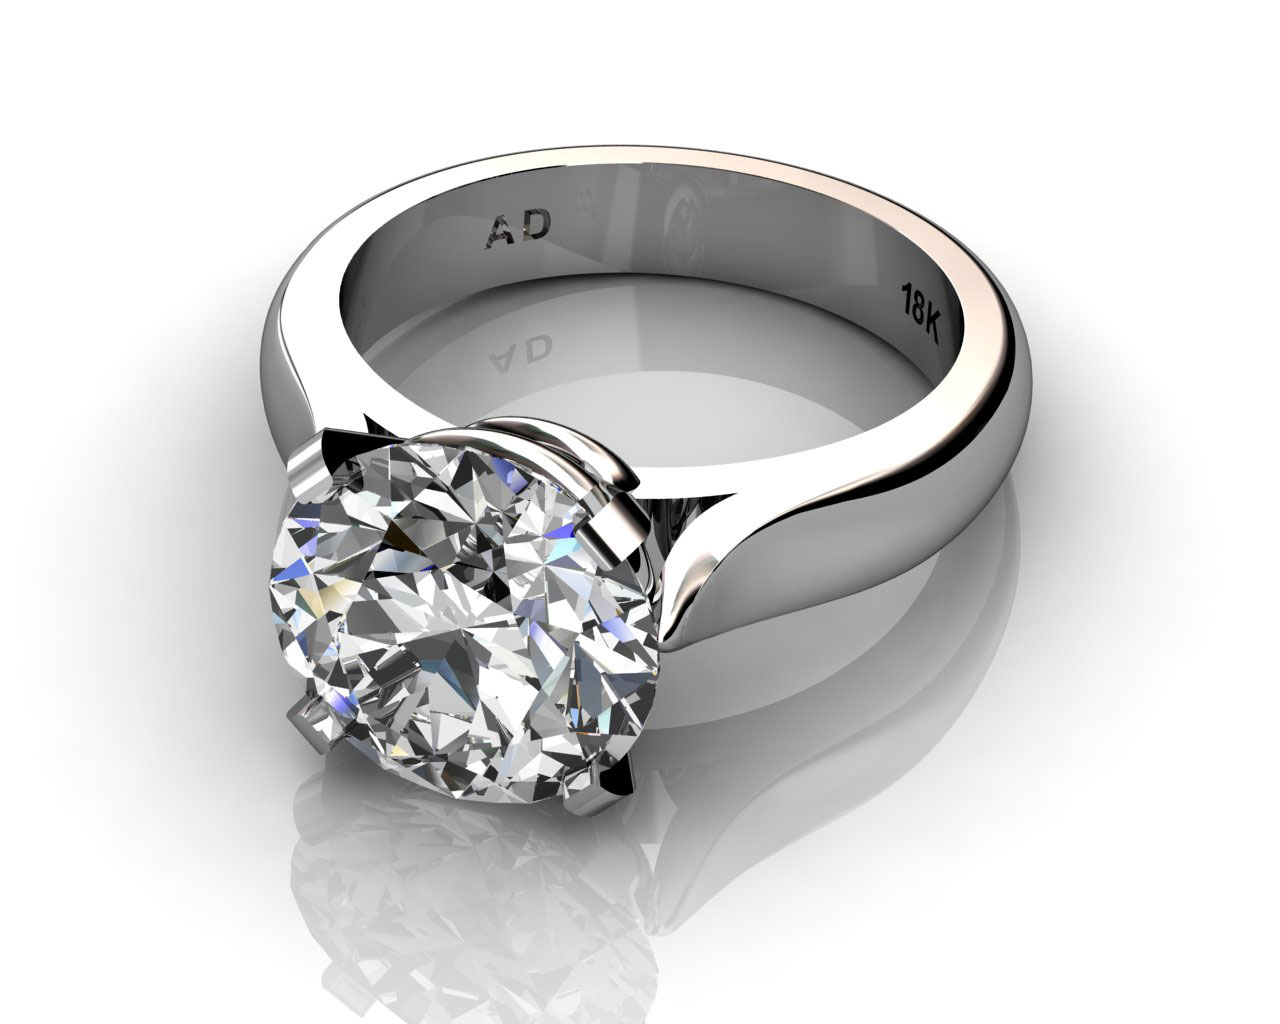 Diamond Engagement Wedding Ring South Bay Gold